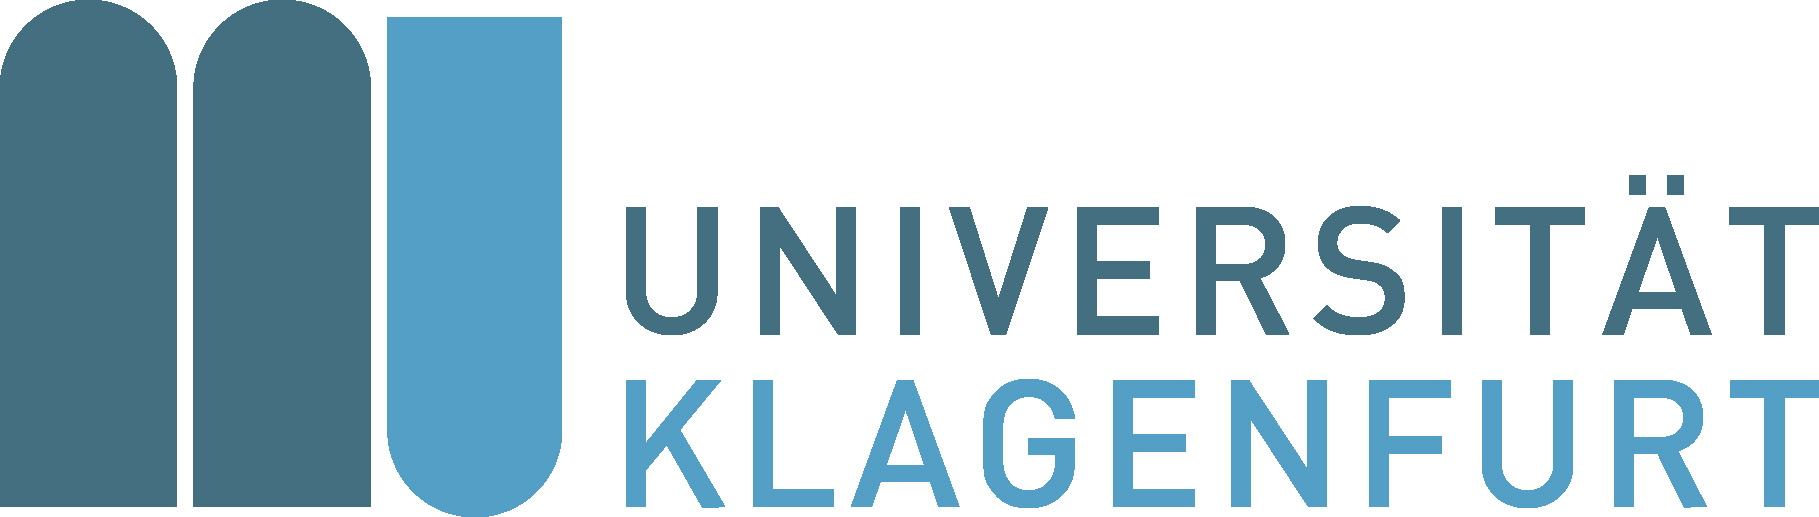 Logo: Alpen-Adria-Universität Klagenfurt